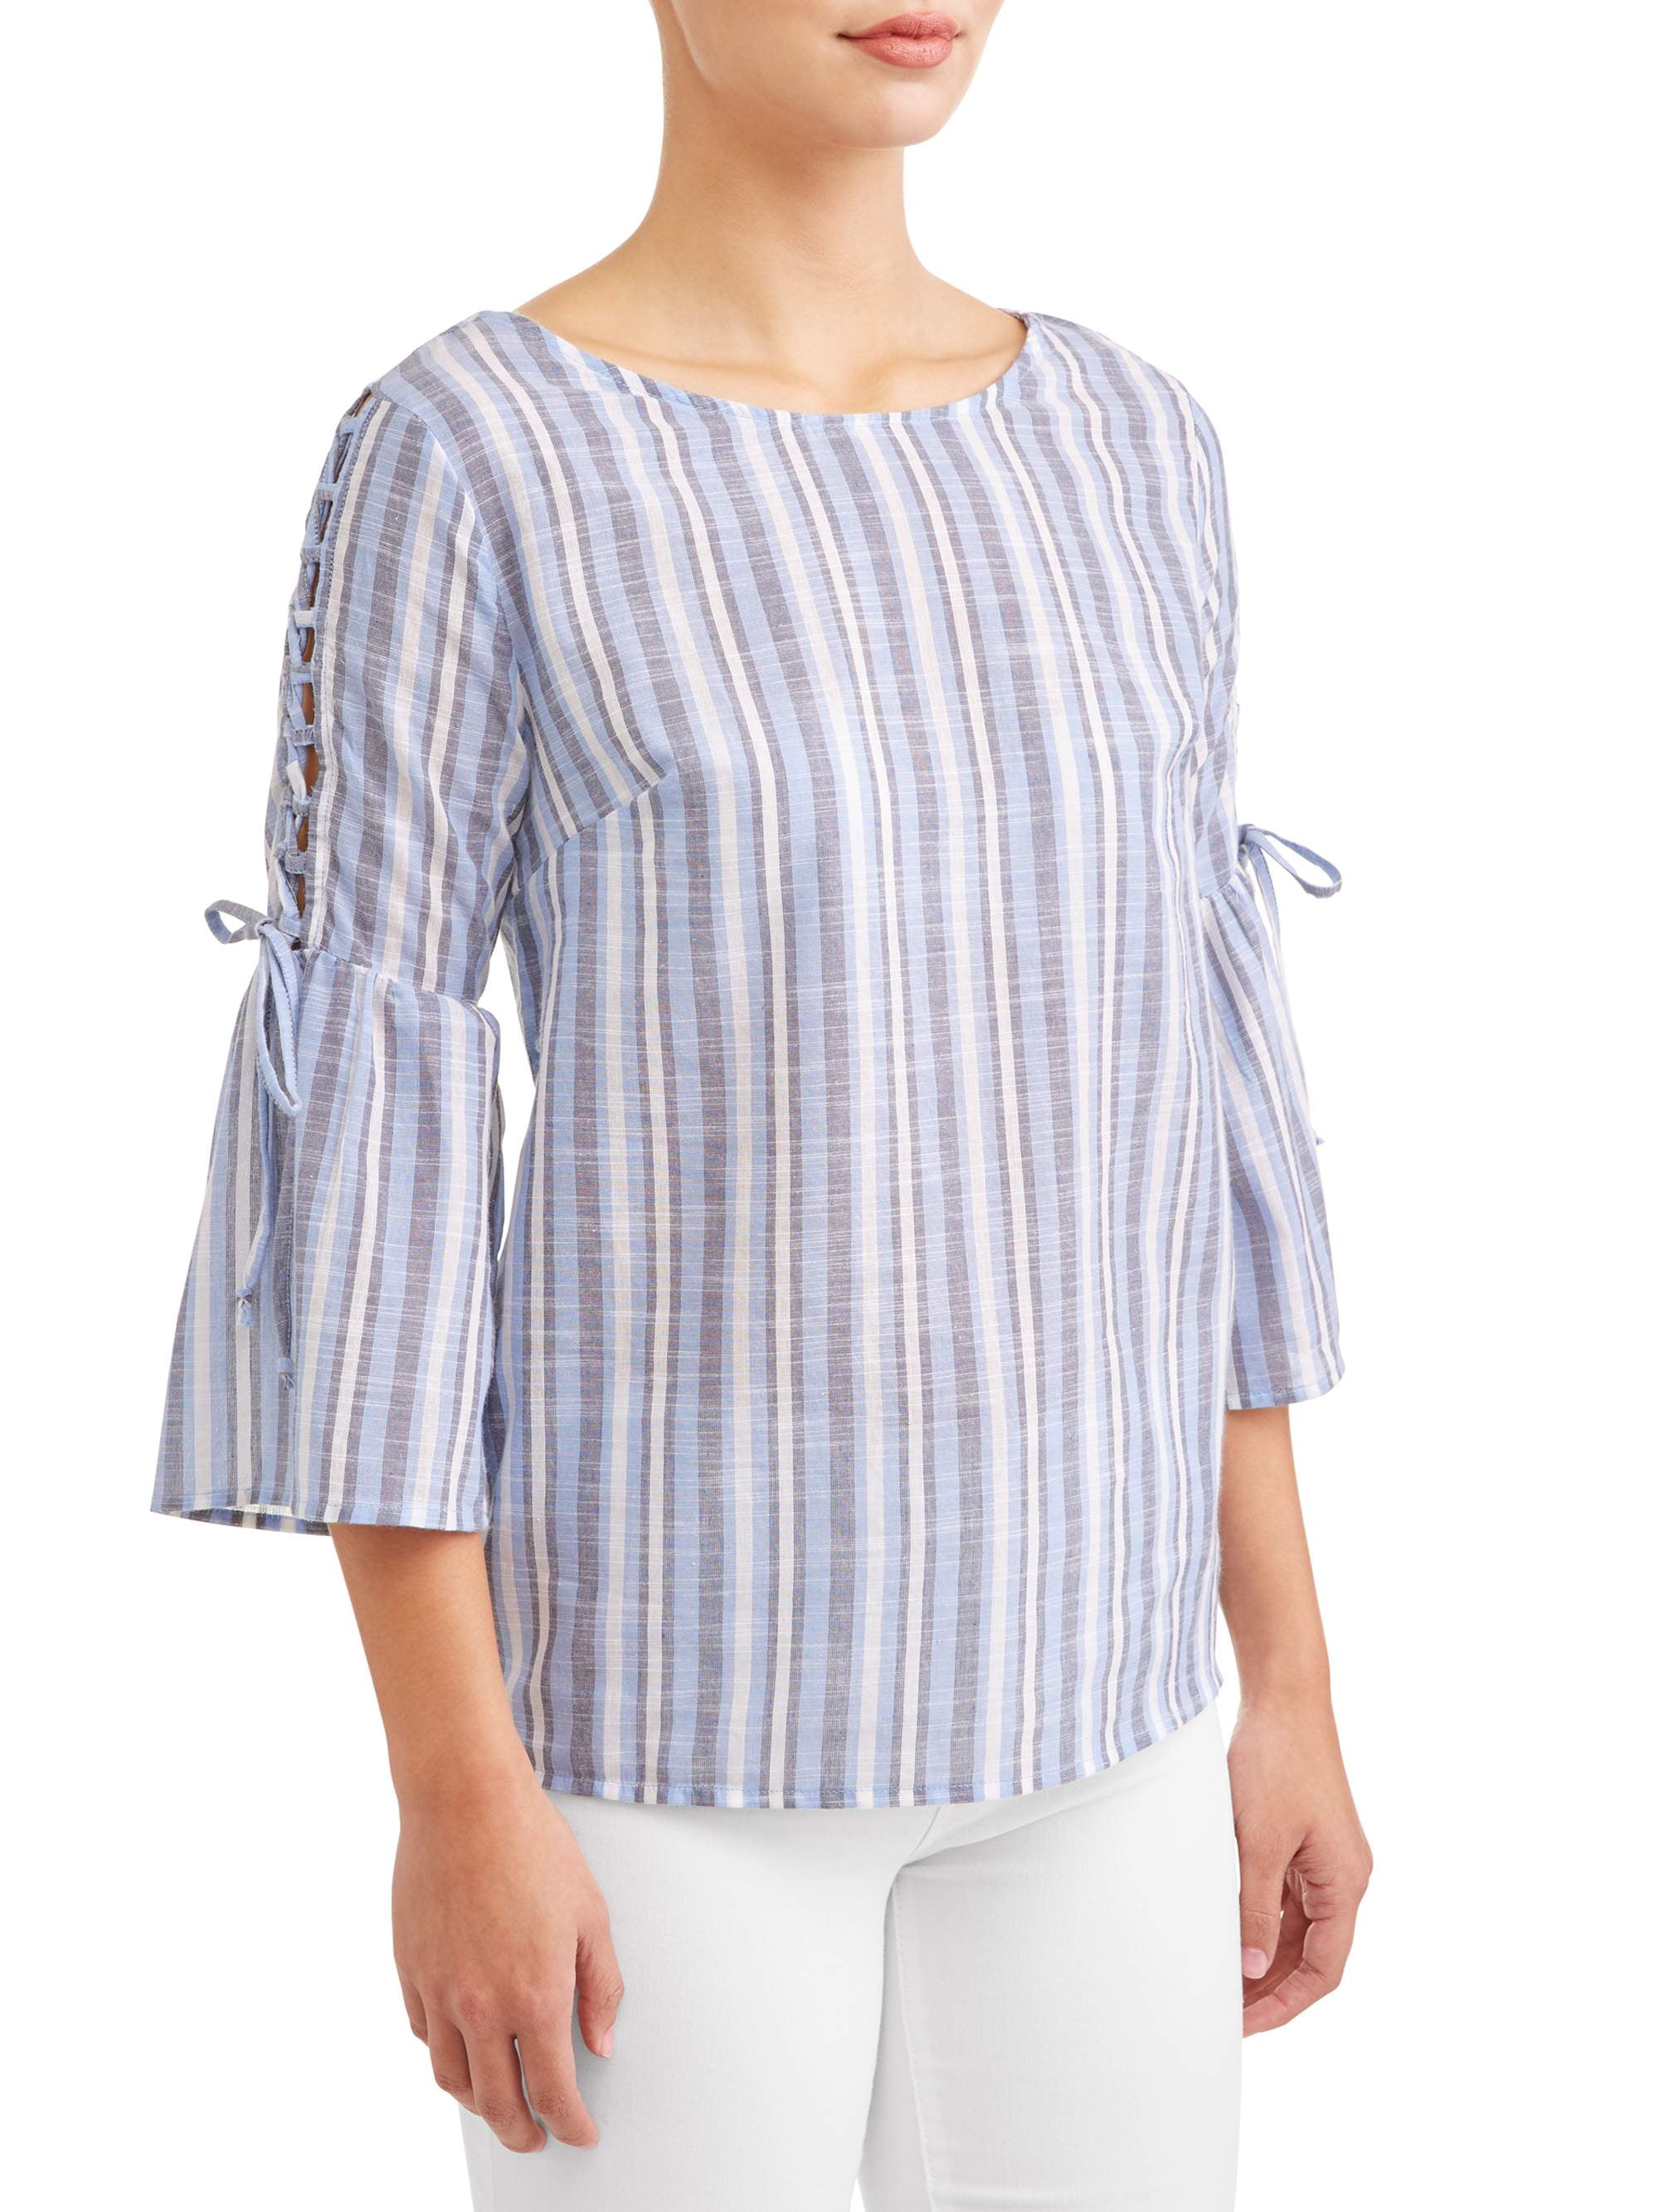 Allison Brittney - Women's Bell Sleeve Lace Up Stripe Top - Walmart.com ...